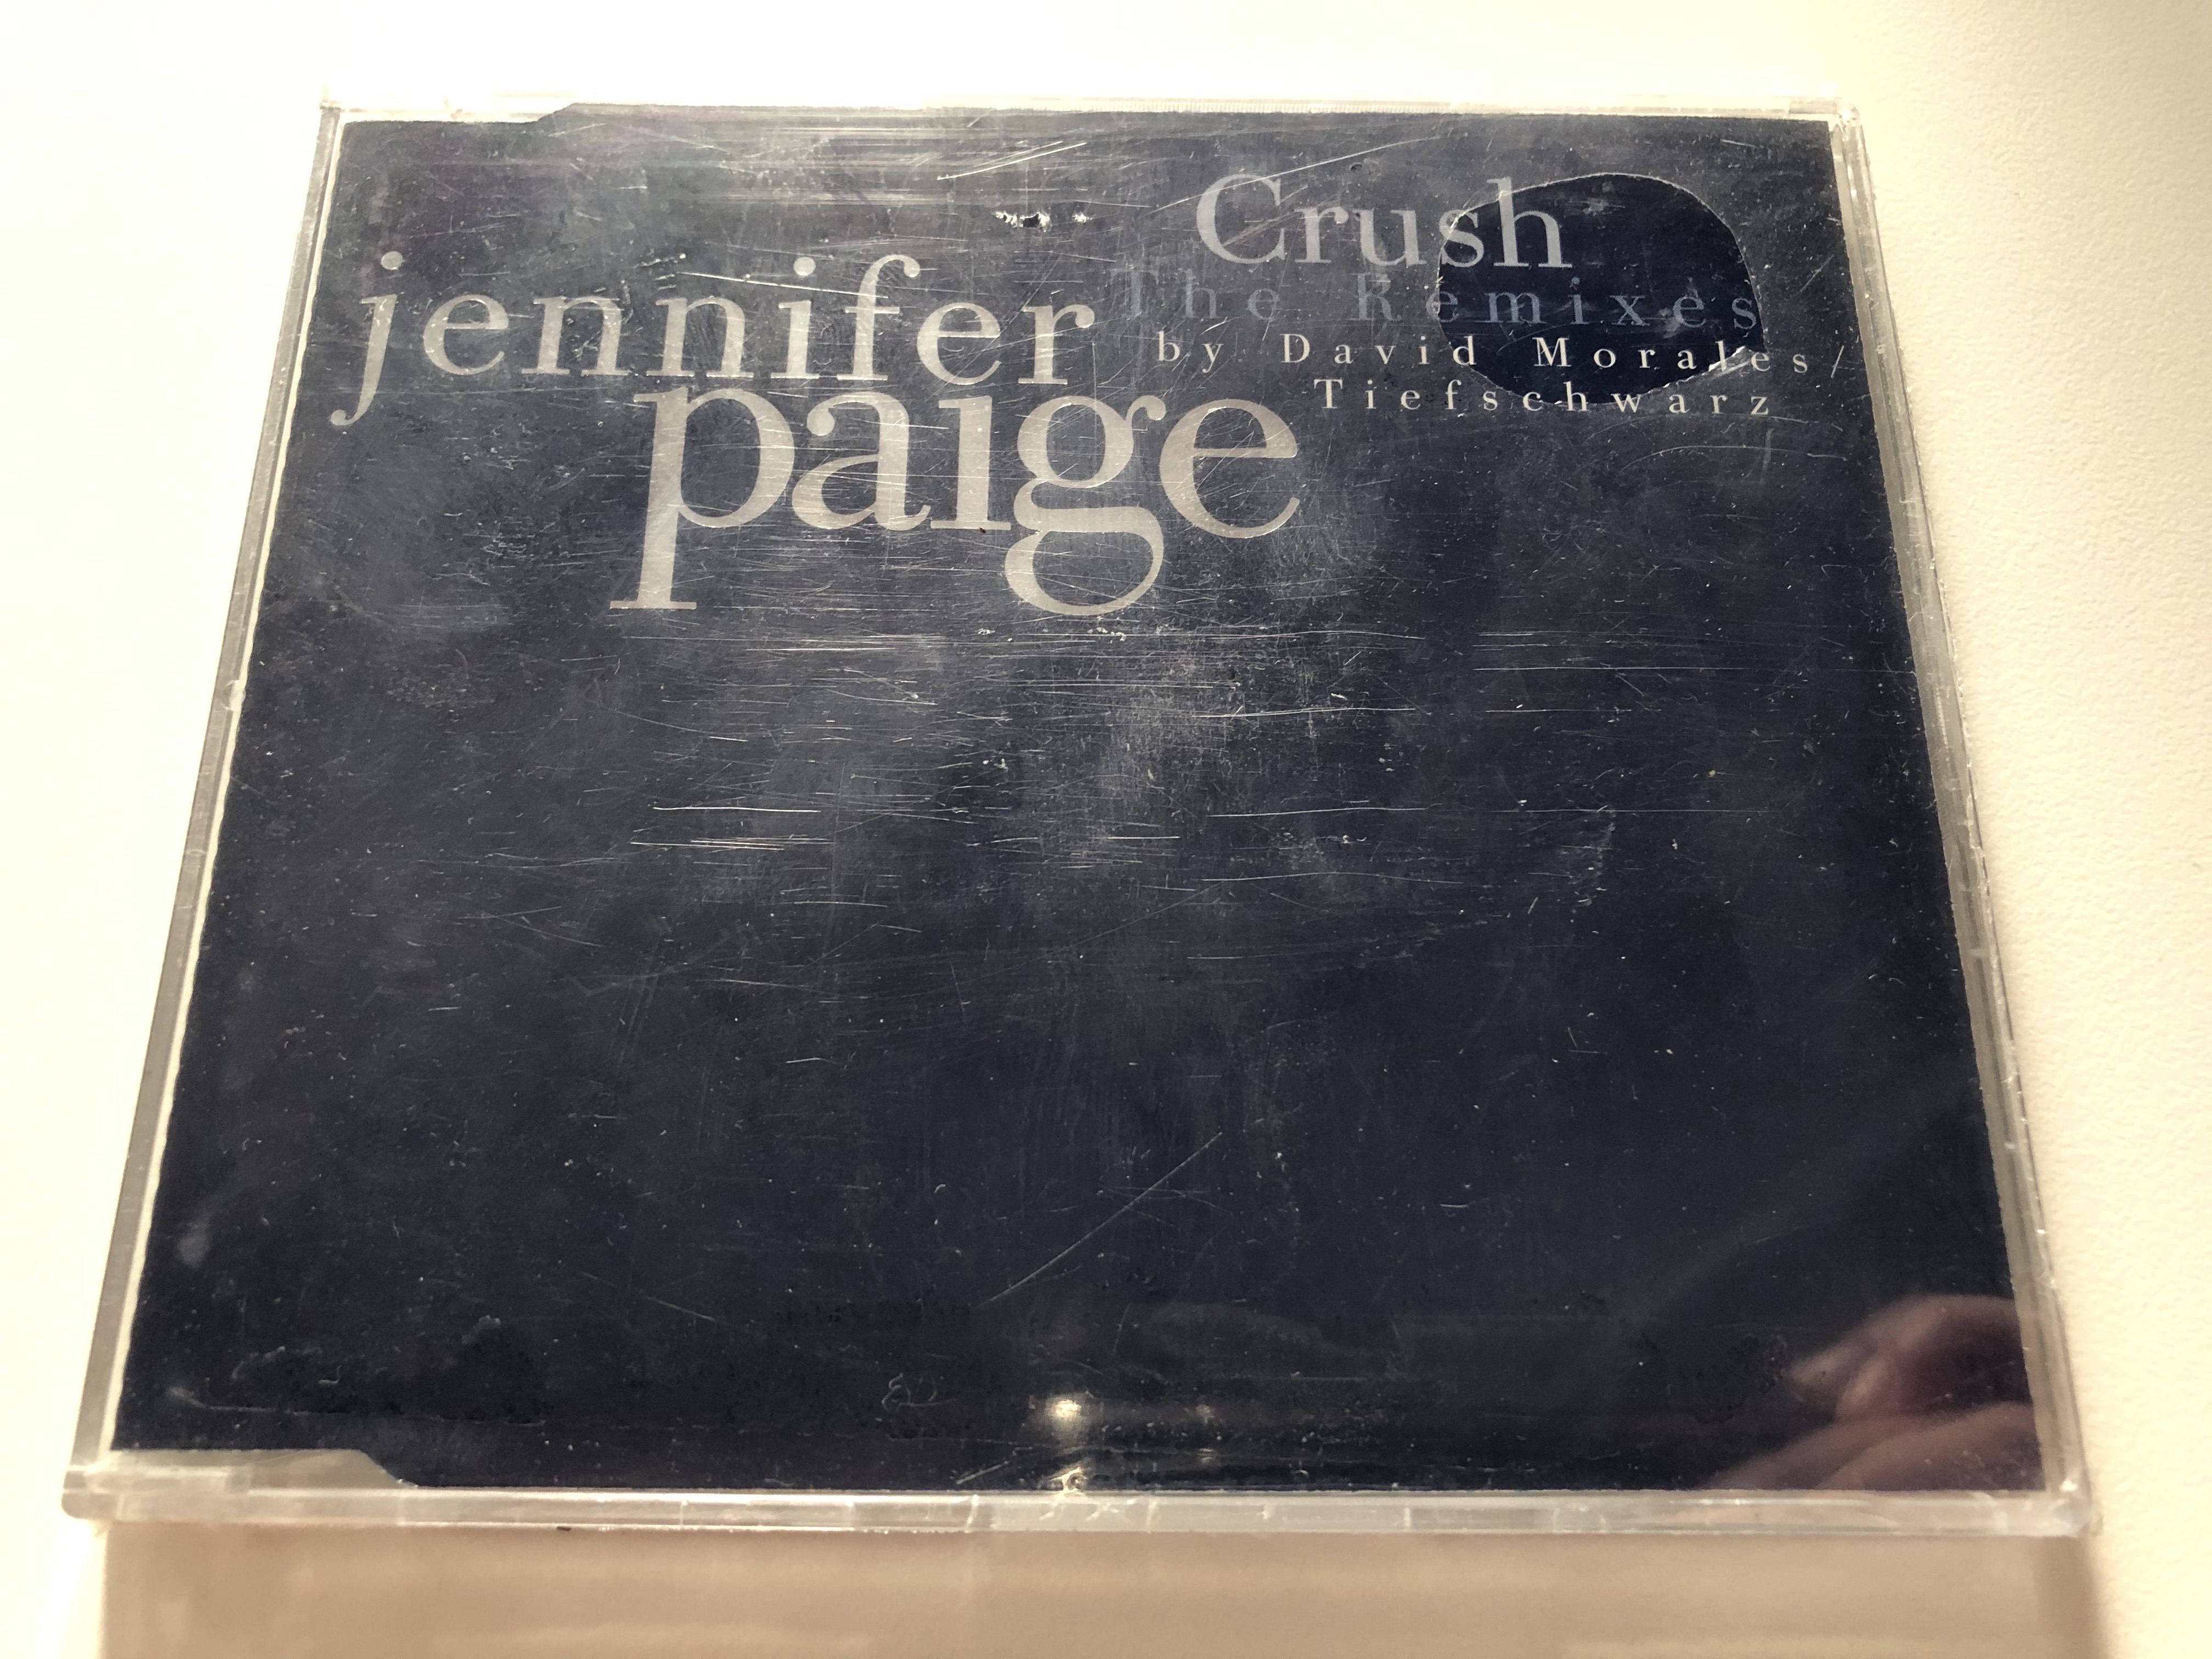 jennifer-paige-crush-the-remixes-by-david-morales-tiefsehwarz-edel-records-audio-cd-1998-0043215ere-1-.jpg